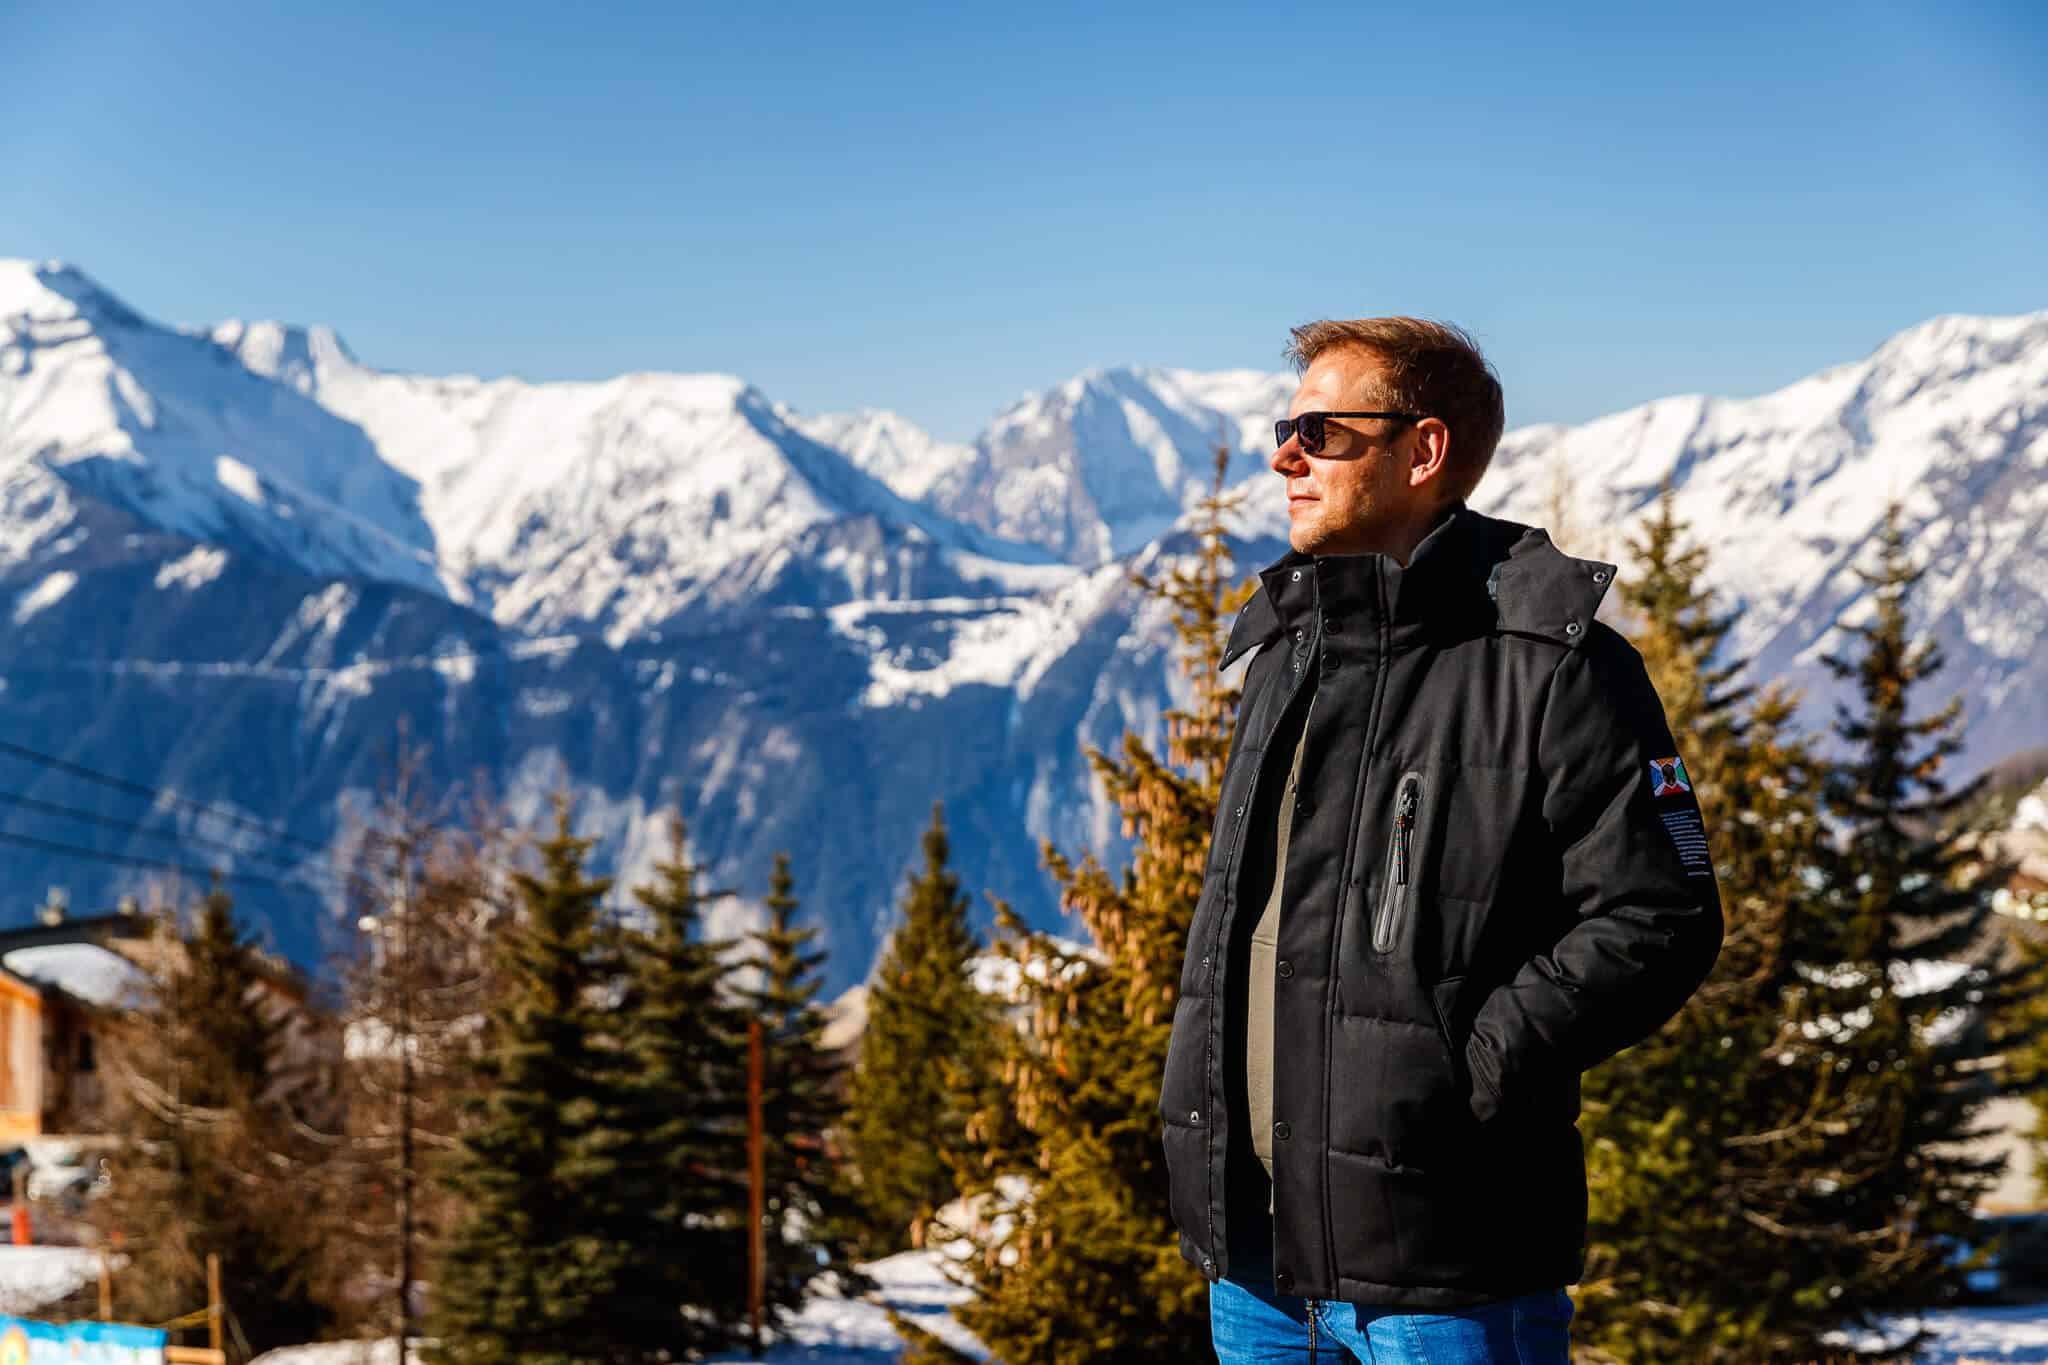 Armin van Buuren has released his meditation routine on Insight Timer